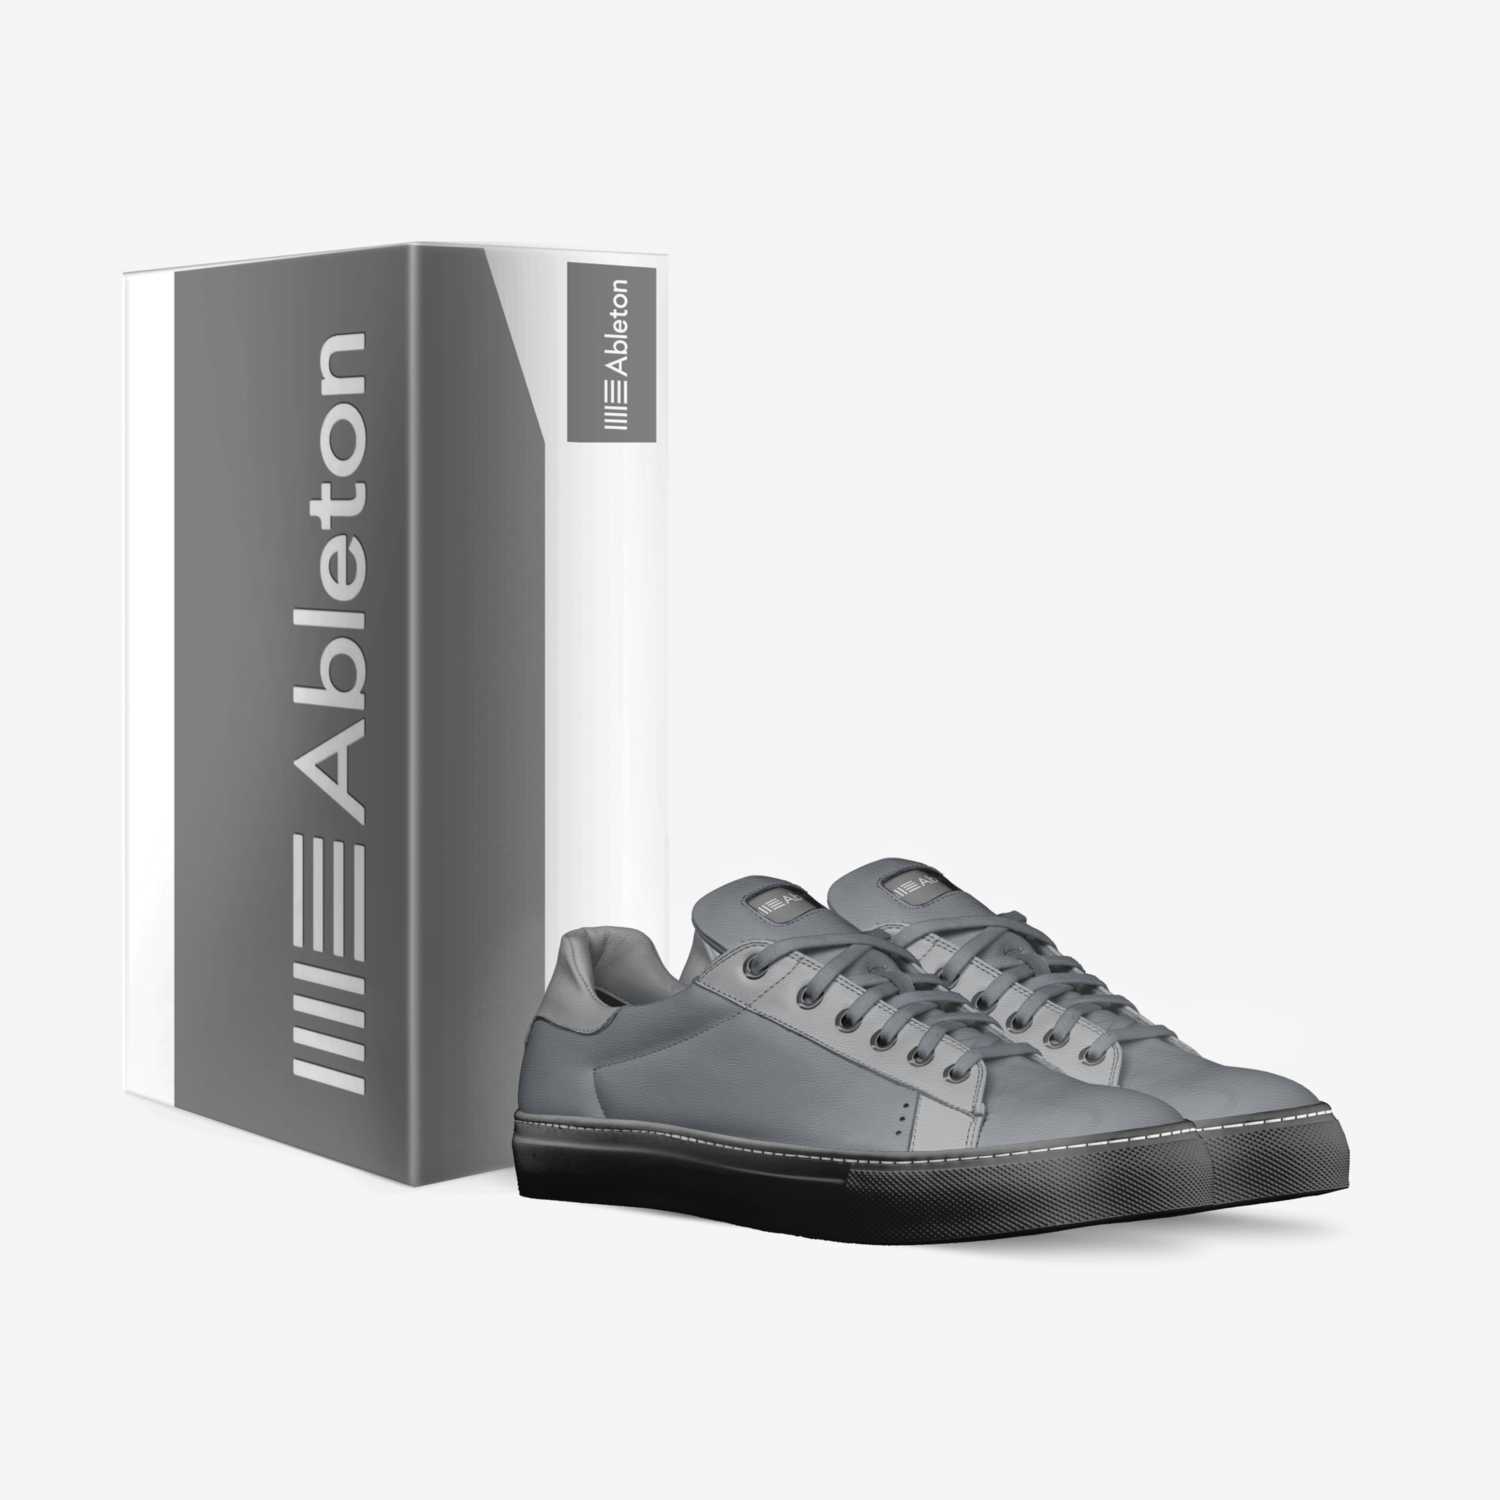 Ableton Live  custom made in Italy shoes by Sebastian Sebper | Box view